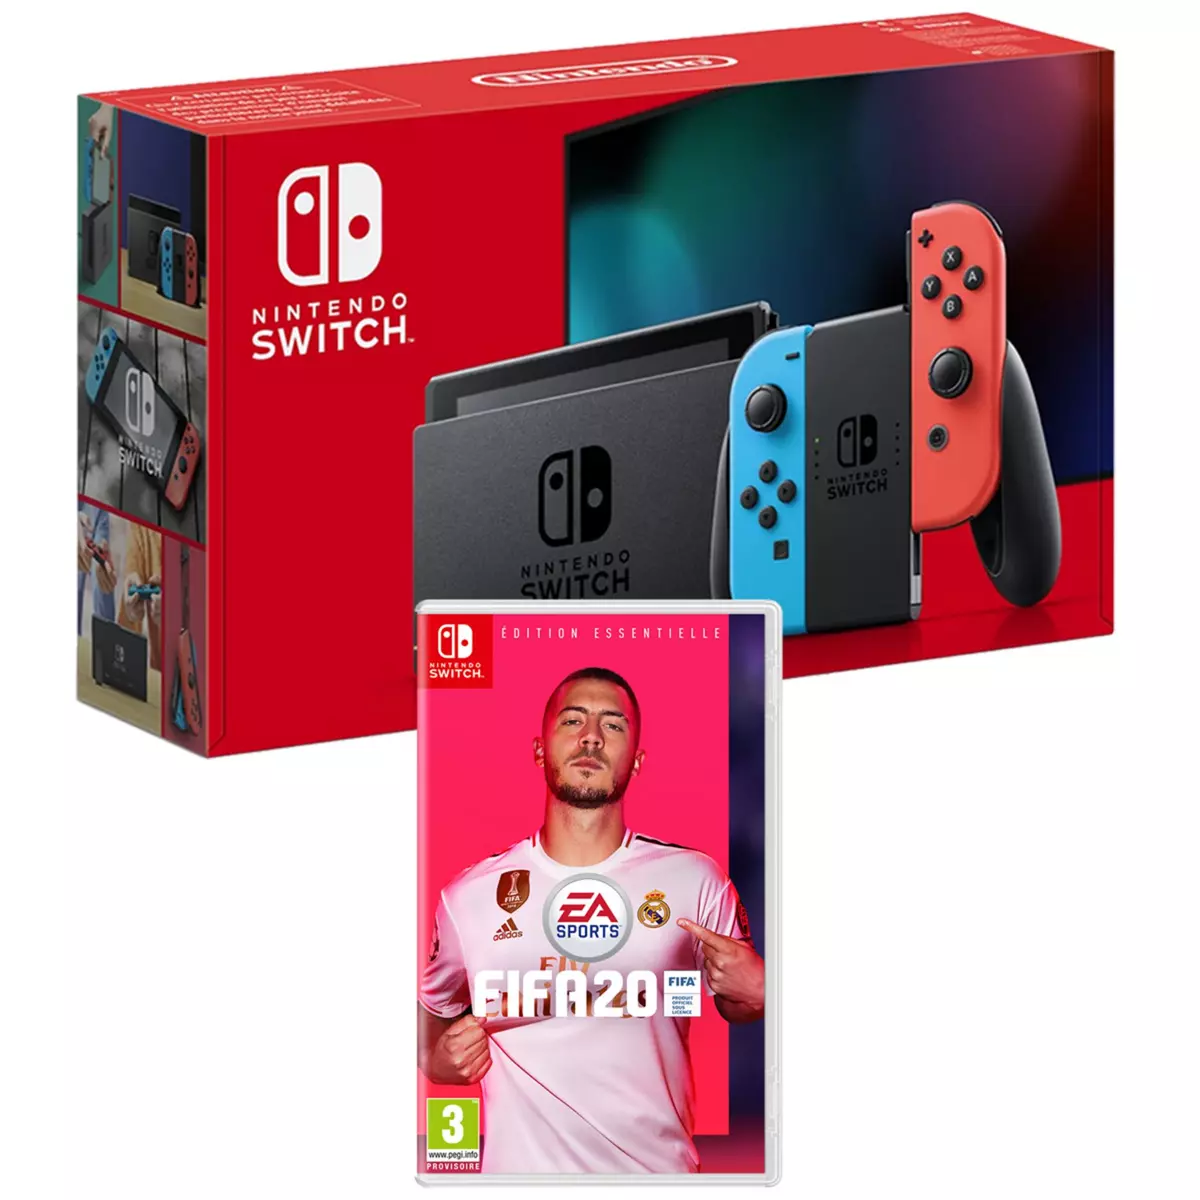 EXCLU WEB Console Nintendo Switch Joy-Con Bleu et Rouge + FIFA 20